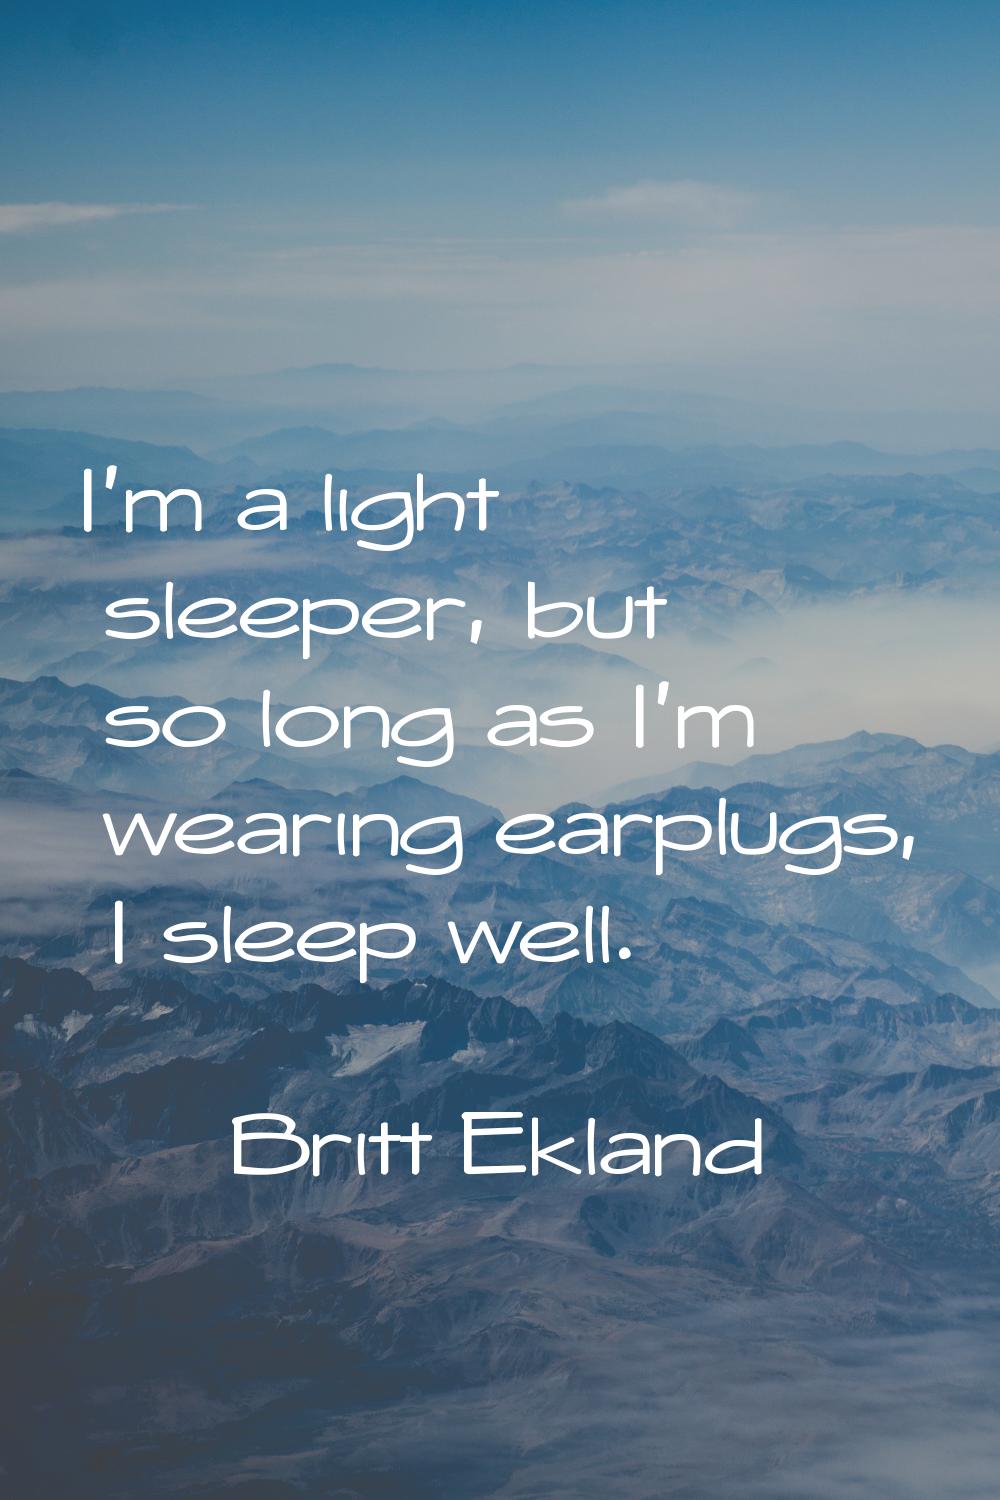 I'm a light sleeper, but so long as I'm wearing earplugs, I sleep well.